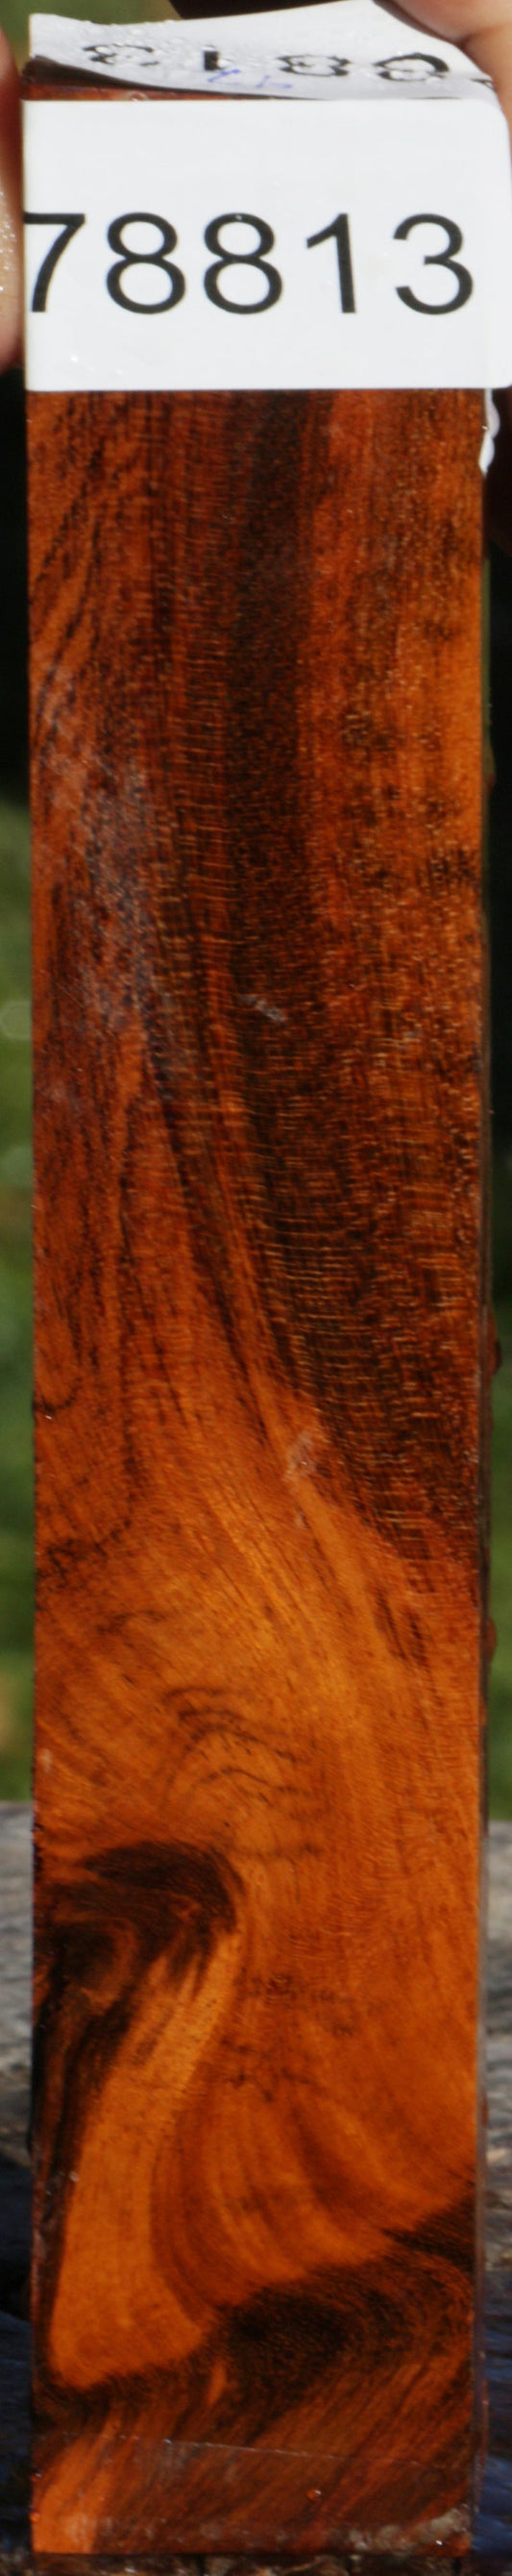 Snakewood Live Edge Lumber